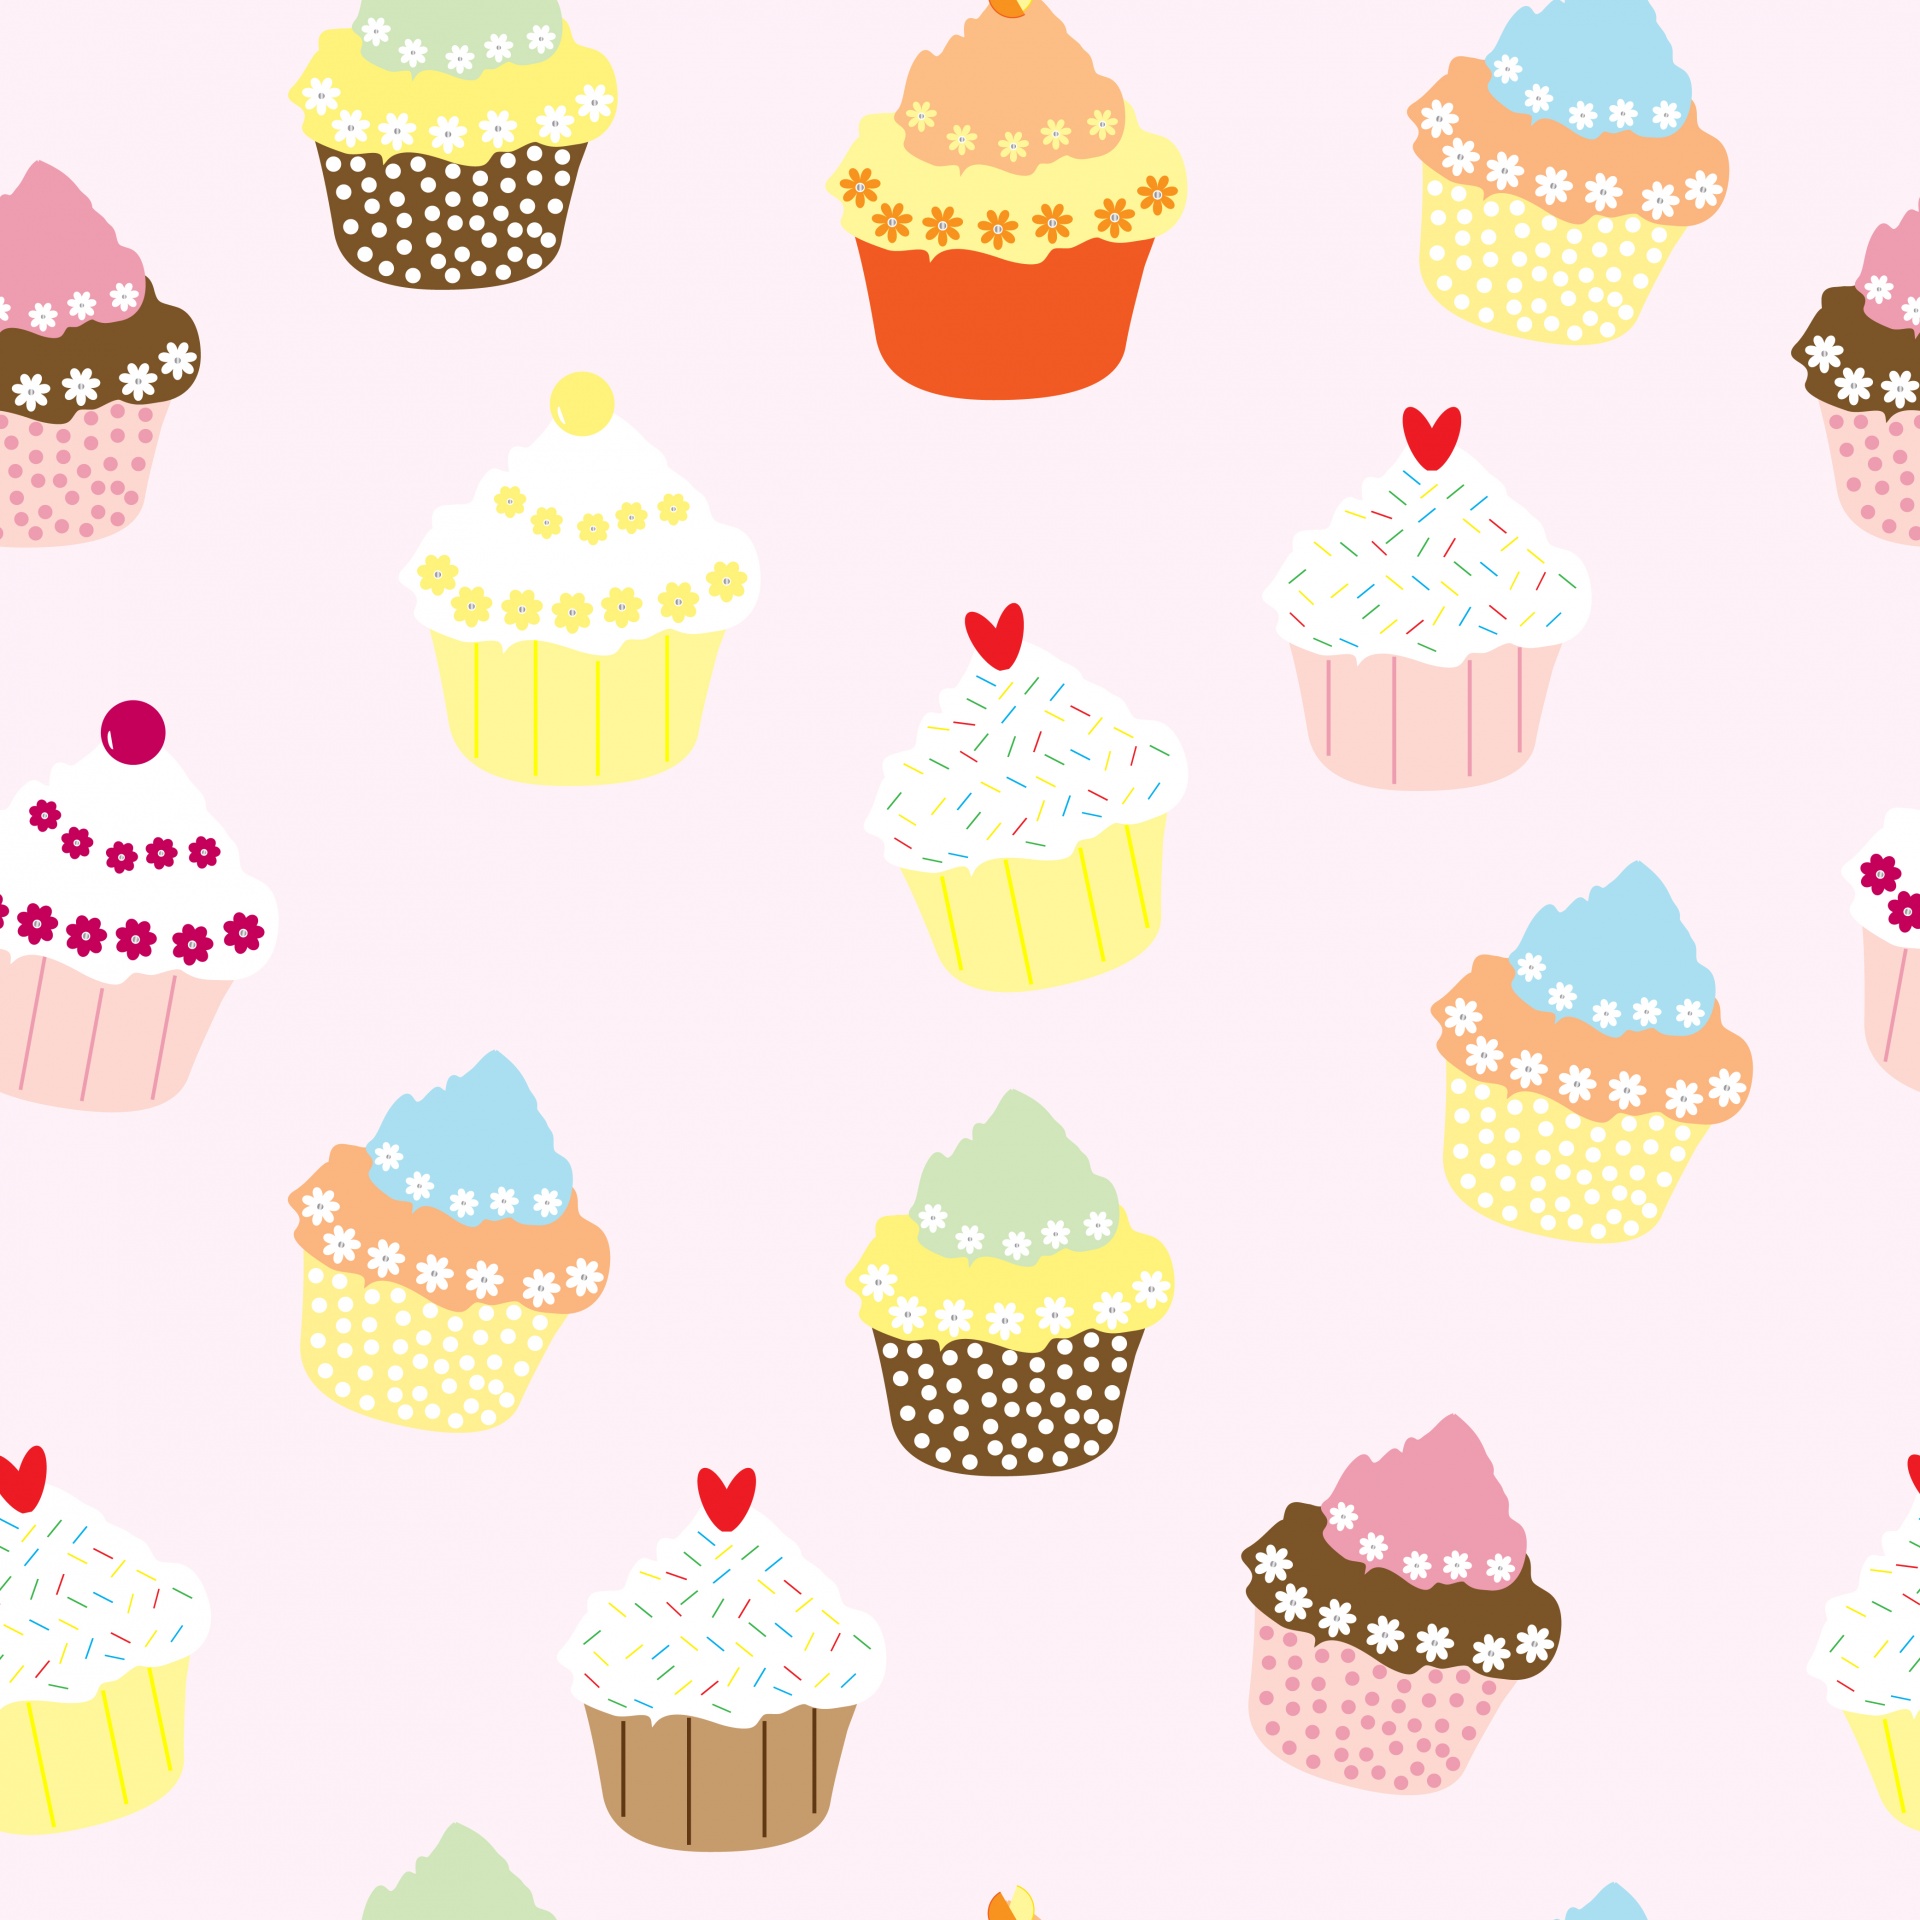 Cupcake Cupcakes Cakes Wallpaper Paper Image From Needpix